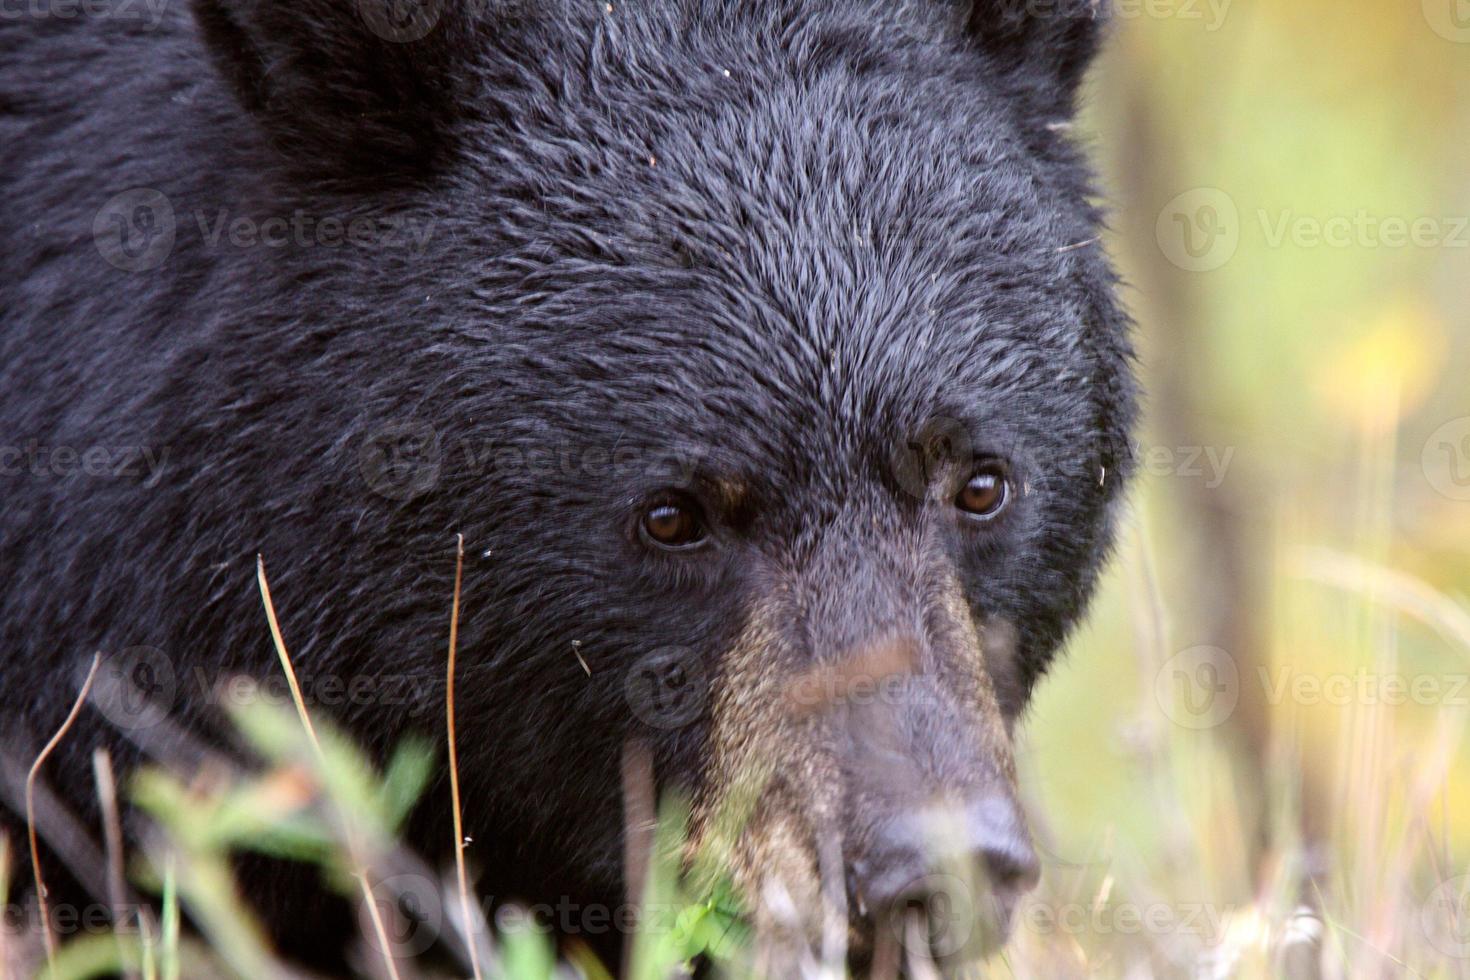 orso nero lungo la British Columbia Highway foto